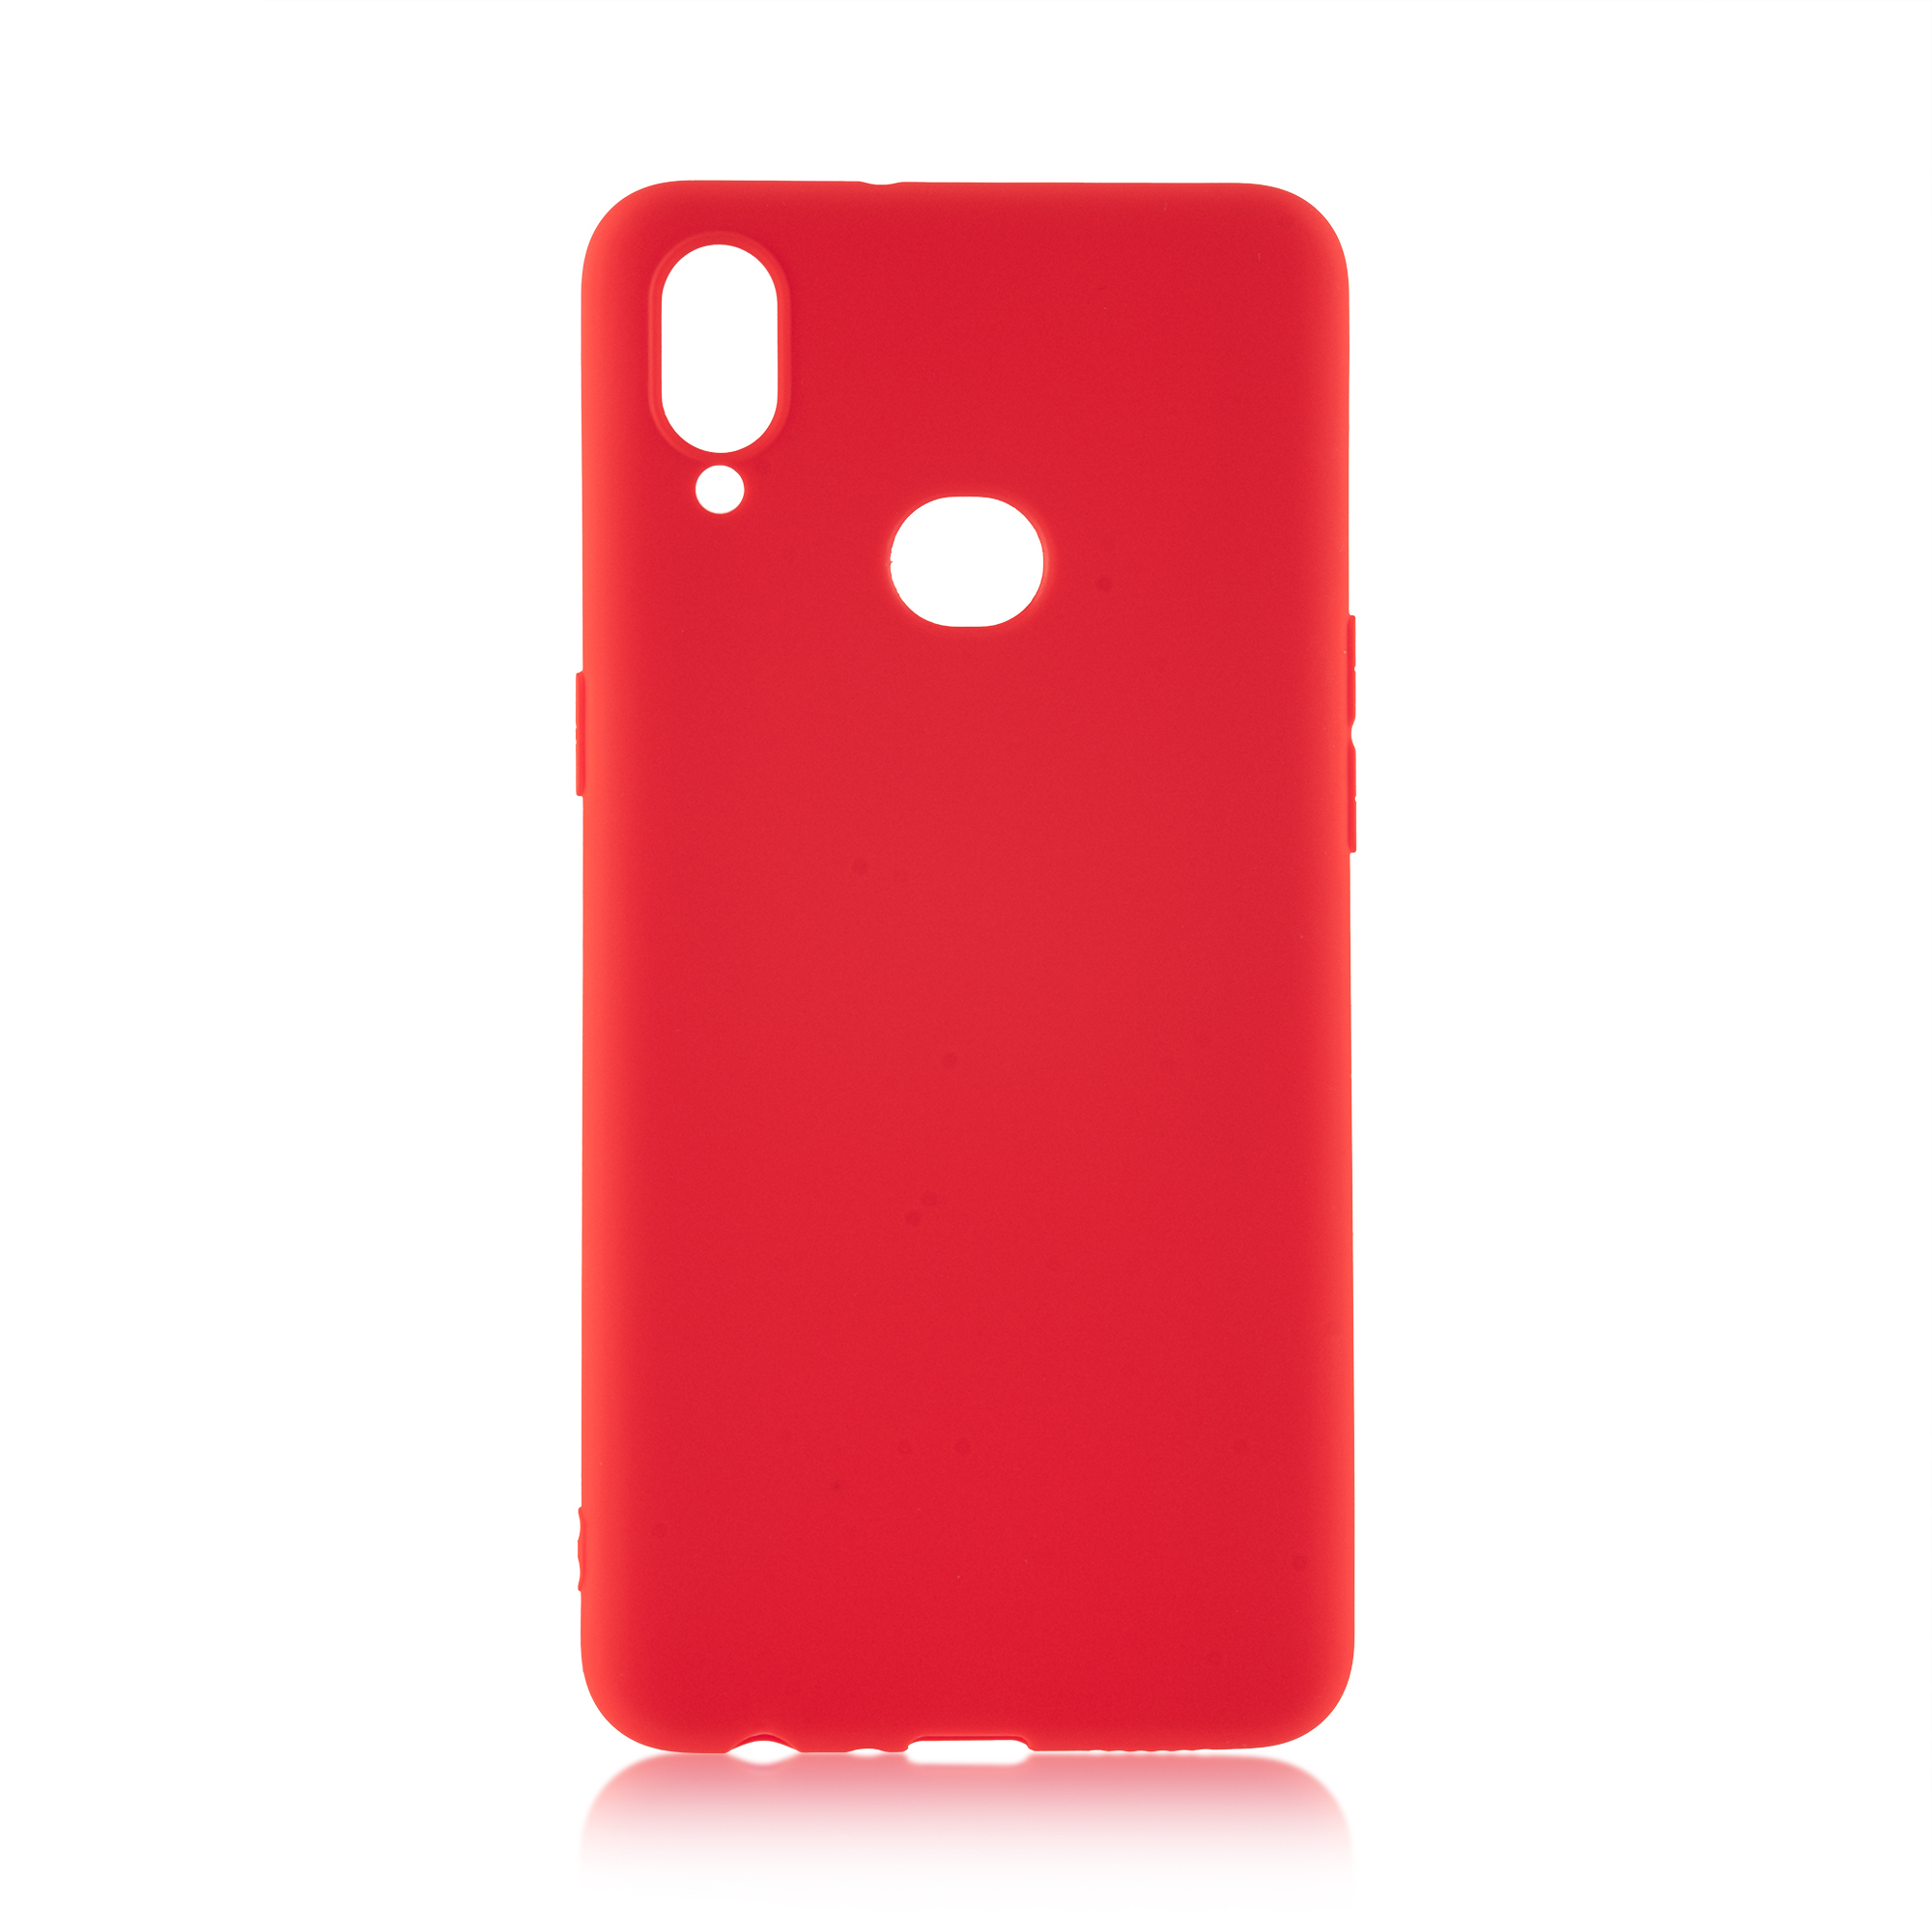 Чехол-накладка BROSCO Colourful для смартфона Samsung Galaxy A10s, силикон, красный (SS-A10S-COLOURFUL-RED)